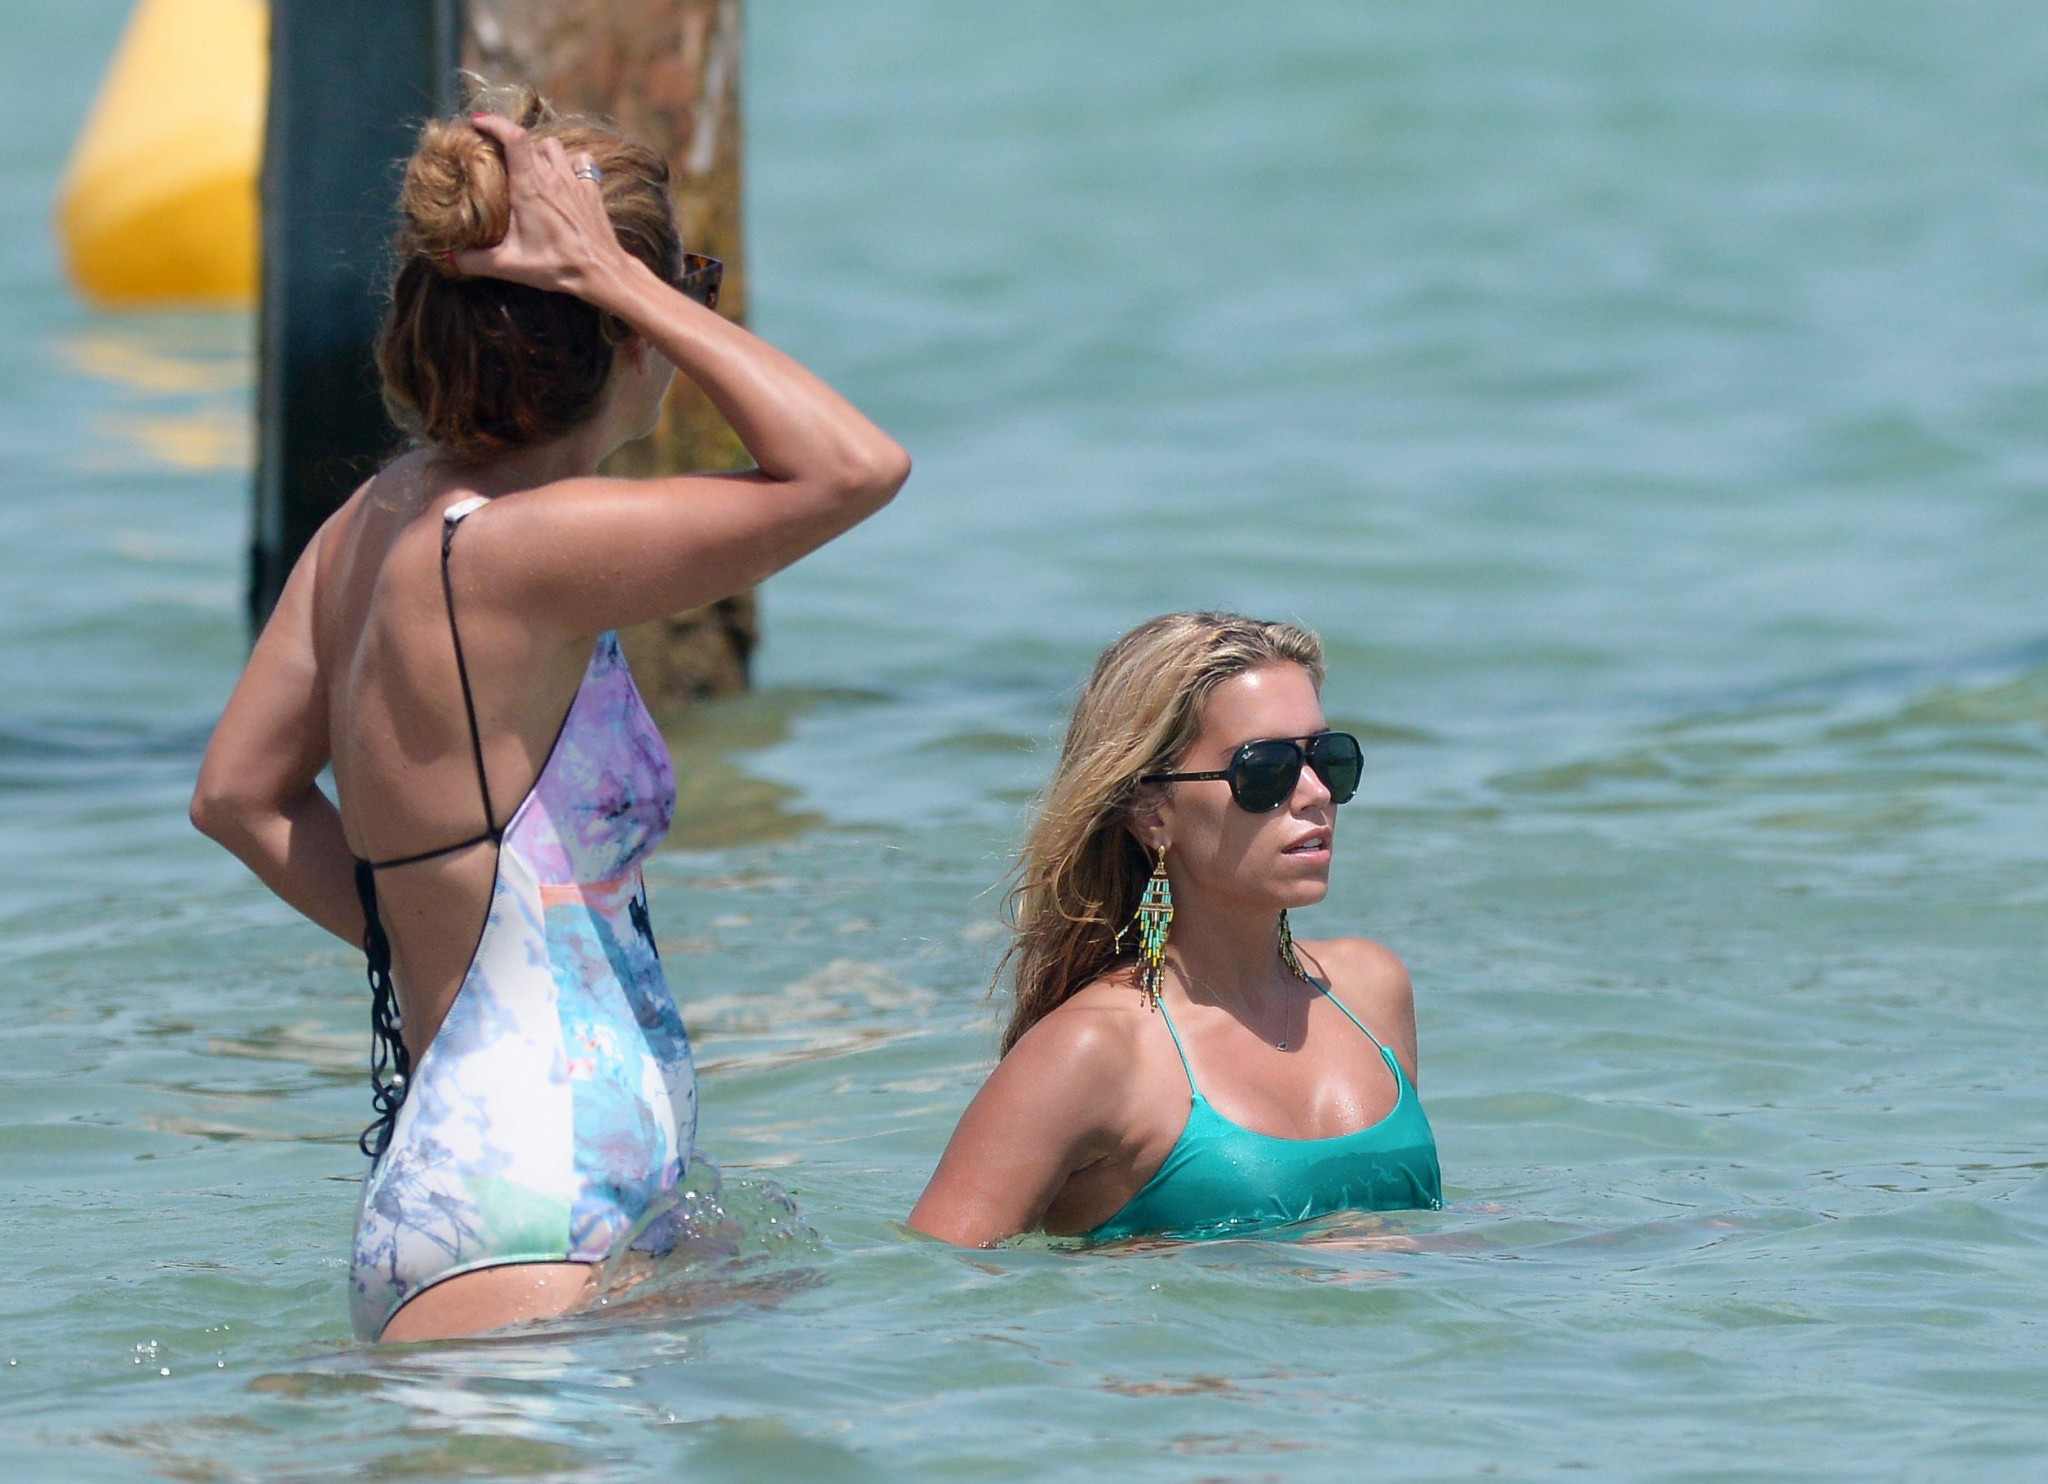 Sylvie Van Der Vaart wearing bikini on a beach in St. Tropez #75222409